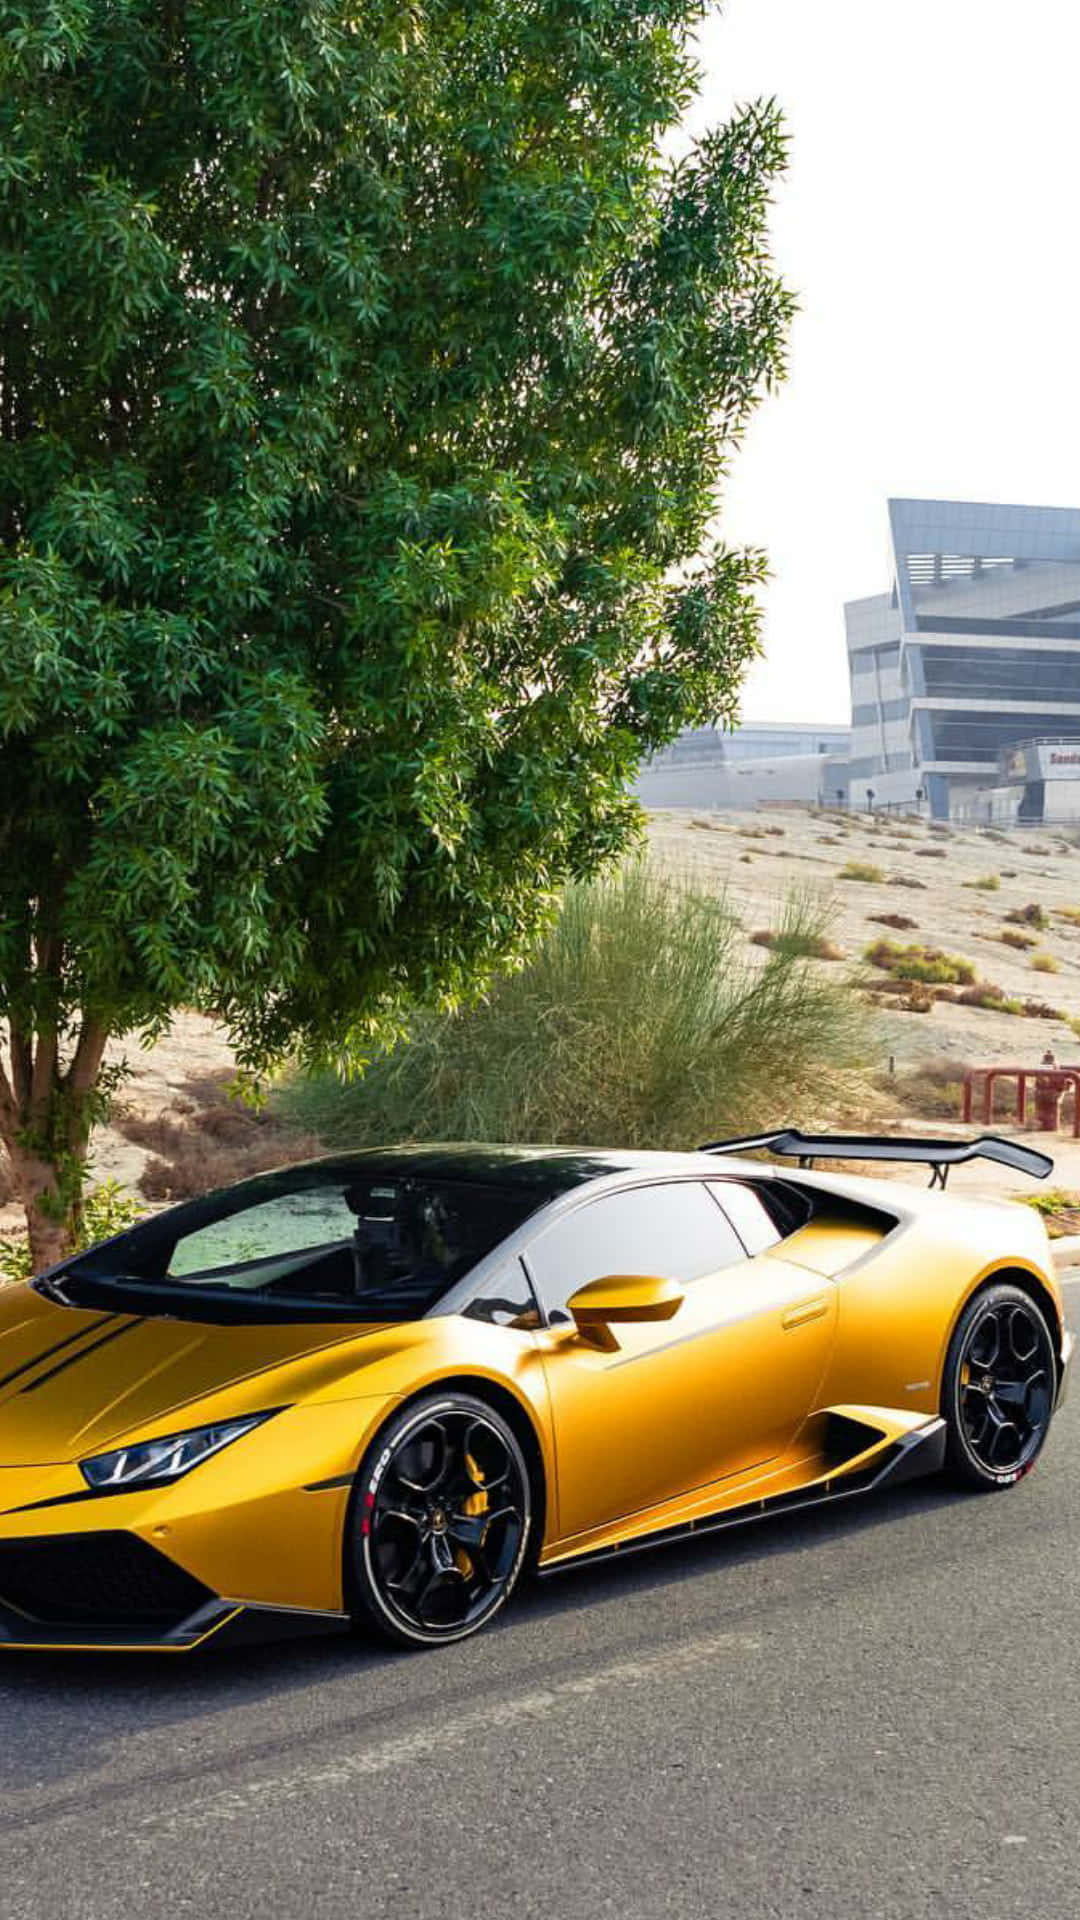 Aceleratu Estilo Con Un Lujoso Lamborghini Dorado. Fondo de pantalla